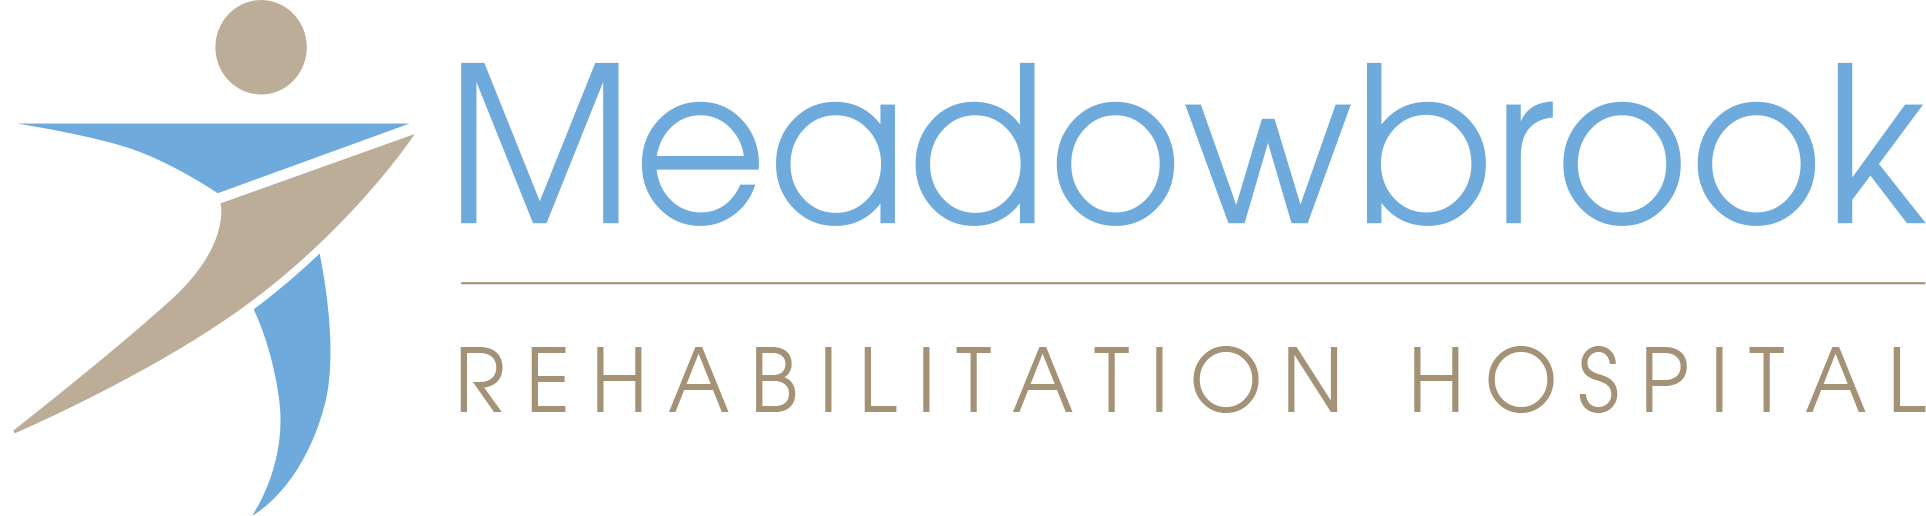 Meadowbrook Rehabilitation